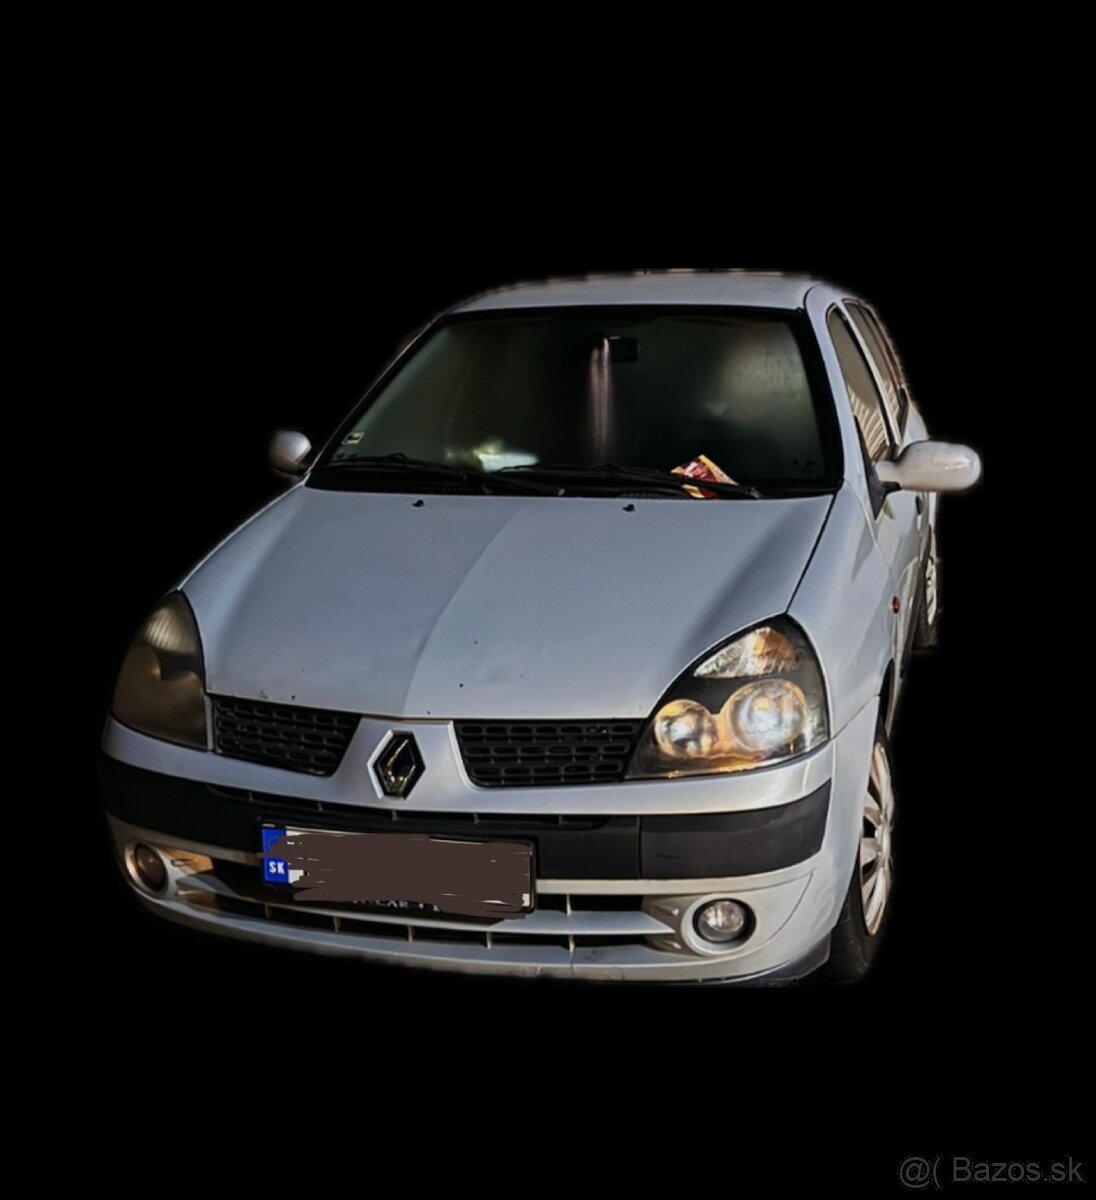 Renault Clio 2 1.2, 55kw, r.v. 2001 REZERVOVANÉ